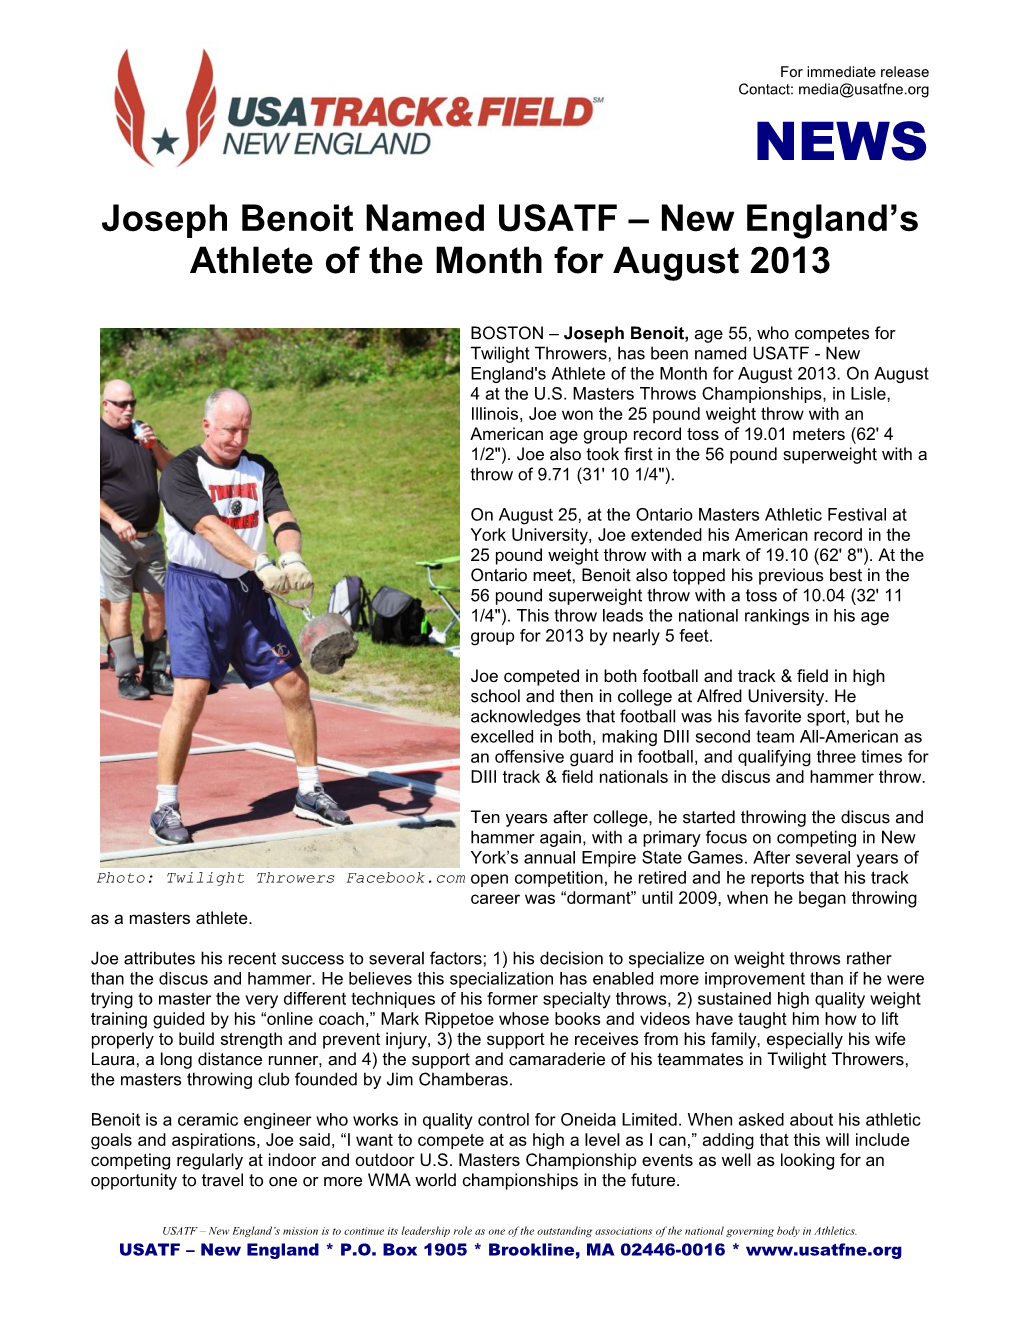 Joseph Benoit Named USATF – New England’S Athlete of the Month for August 2013